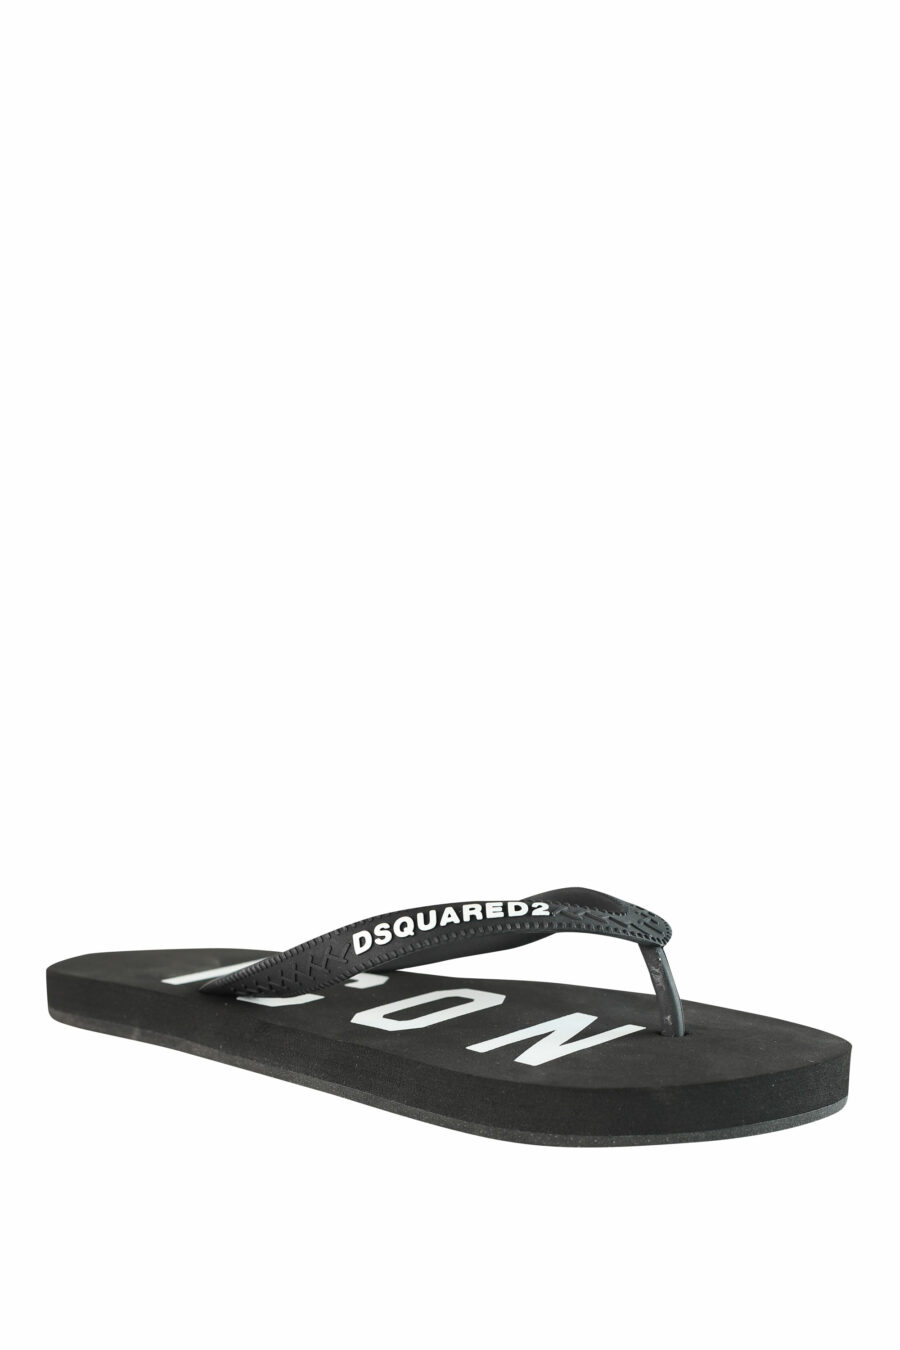 Black flip flops with white logo - IMG 1278